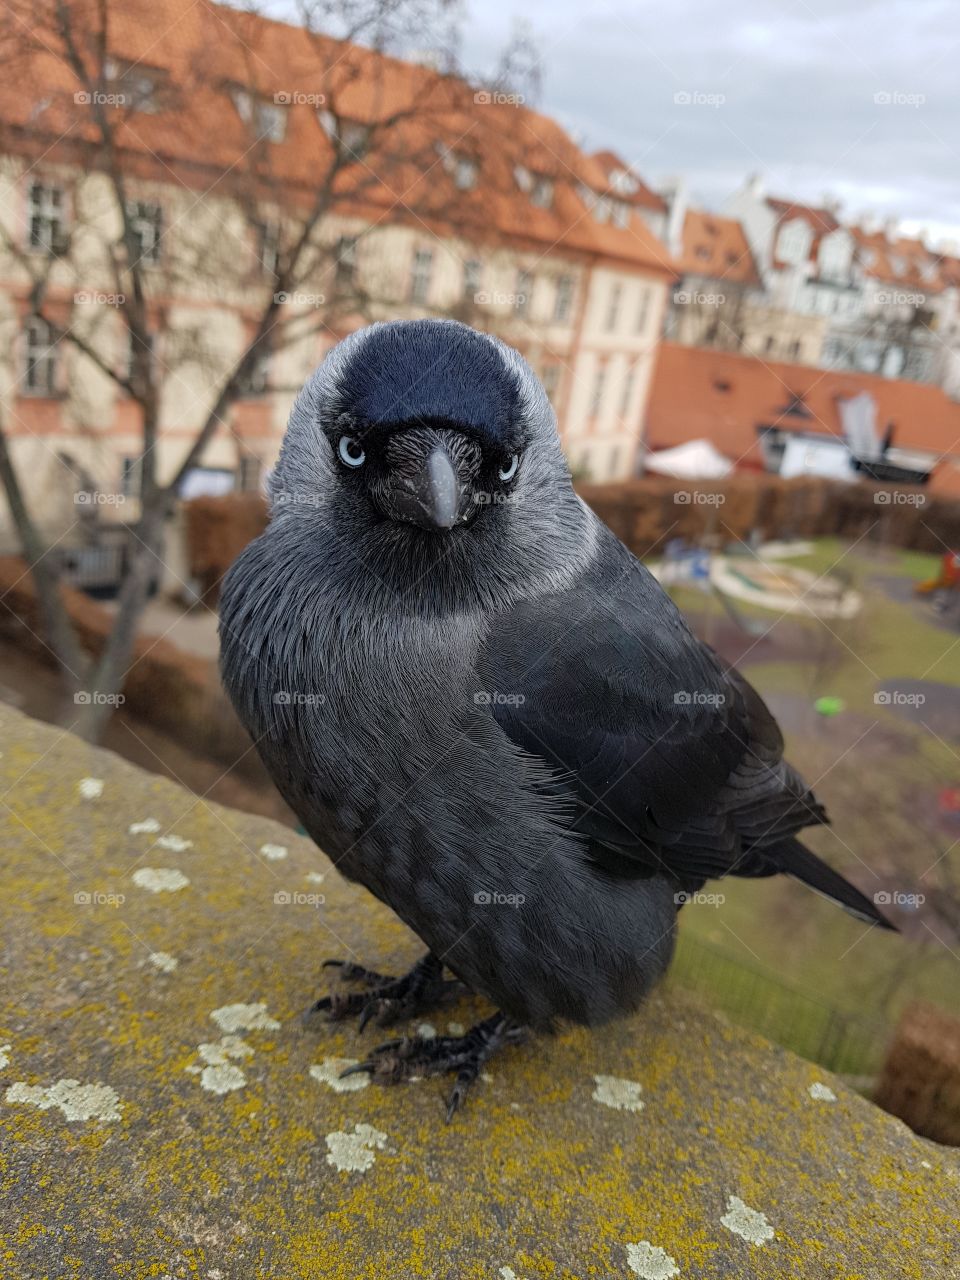 Pretty bird on the Charles Bridge in Prague